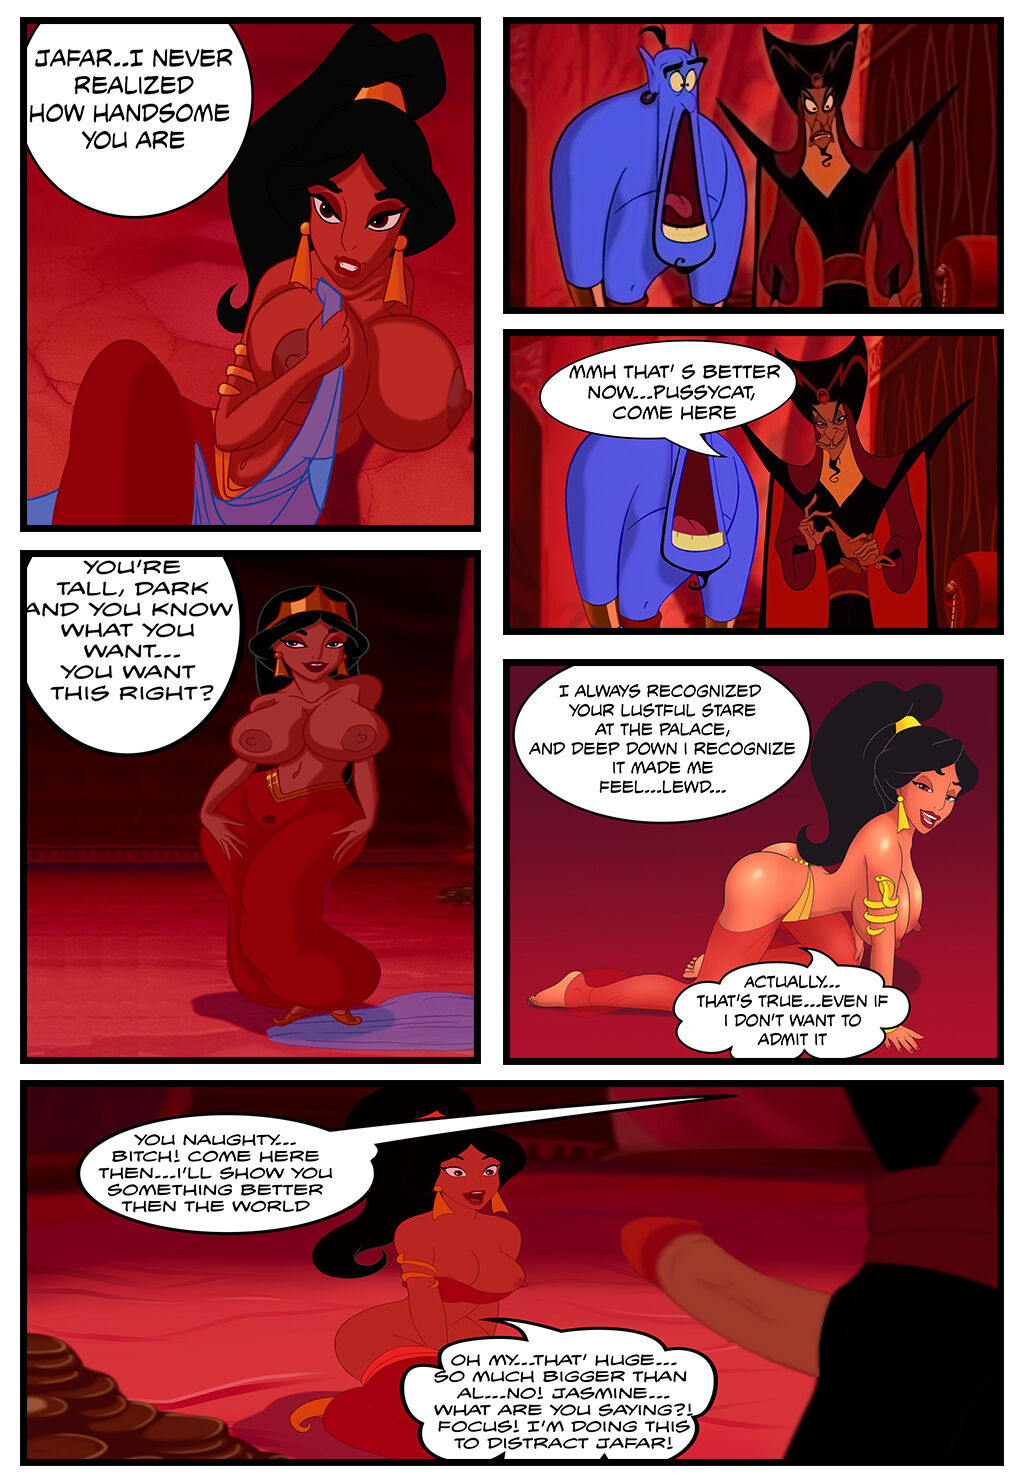 Jasmine Cartoon Porno - Jasmine wants Jafar (Aladdin) - Porn Cartoon Comics